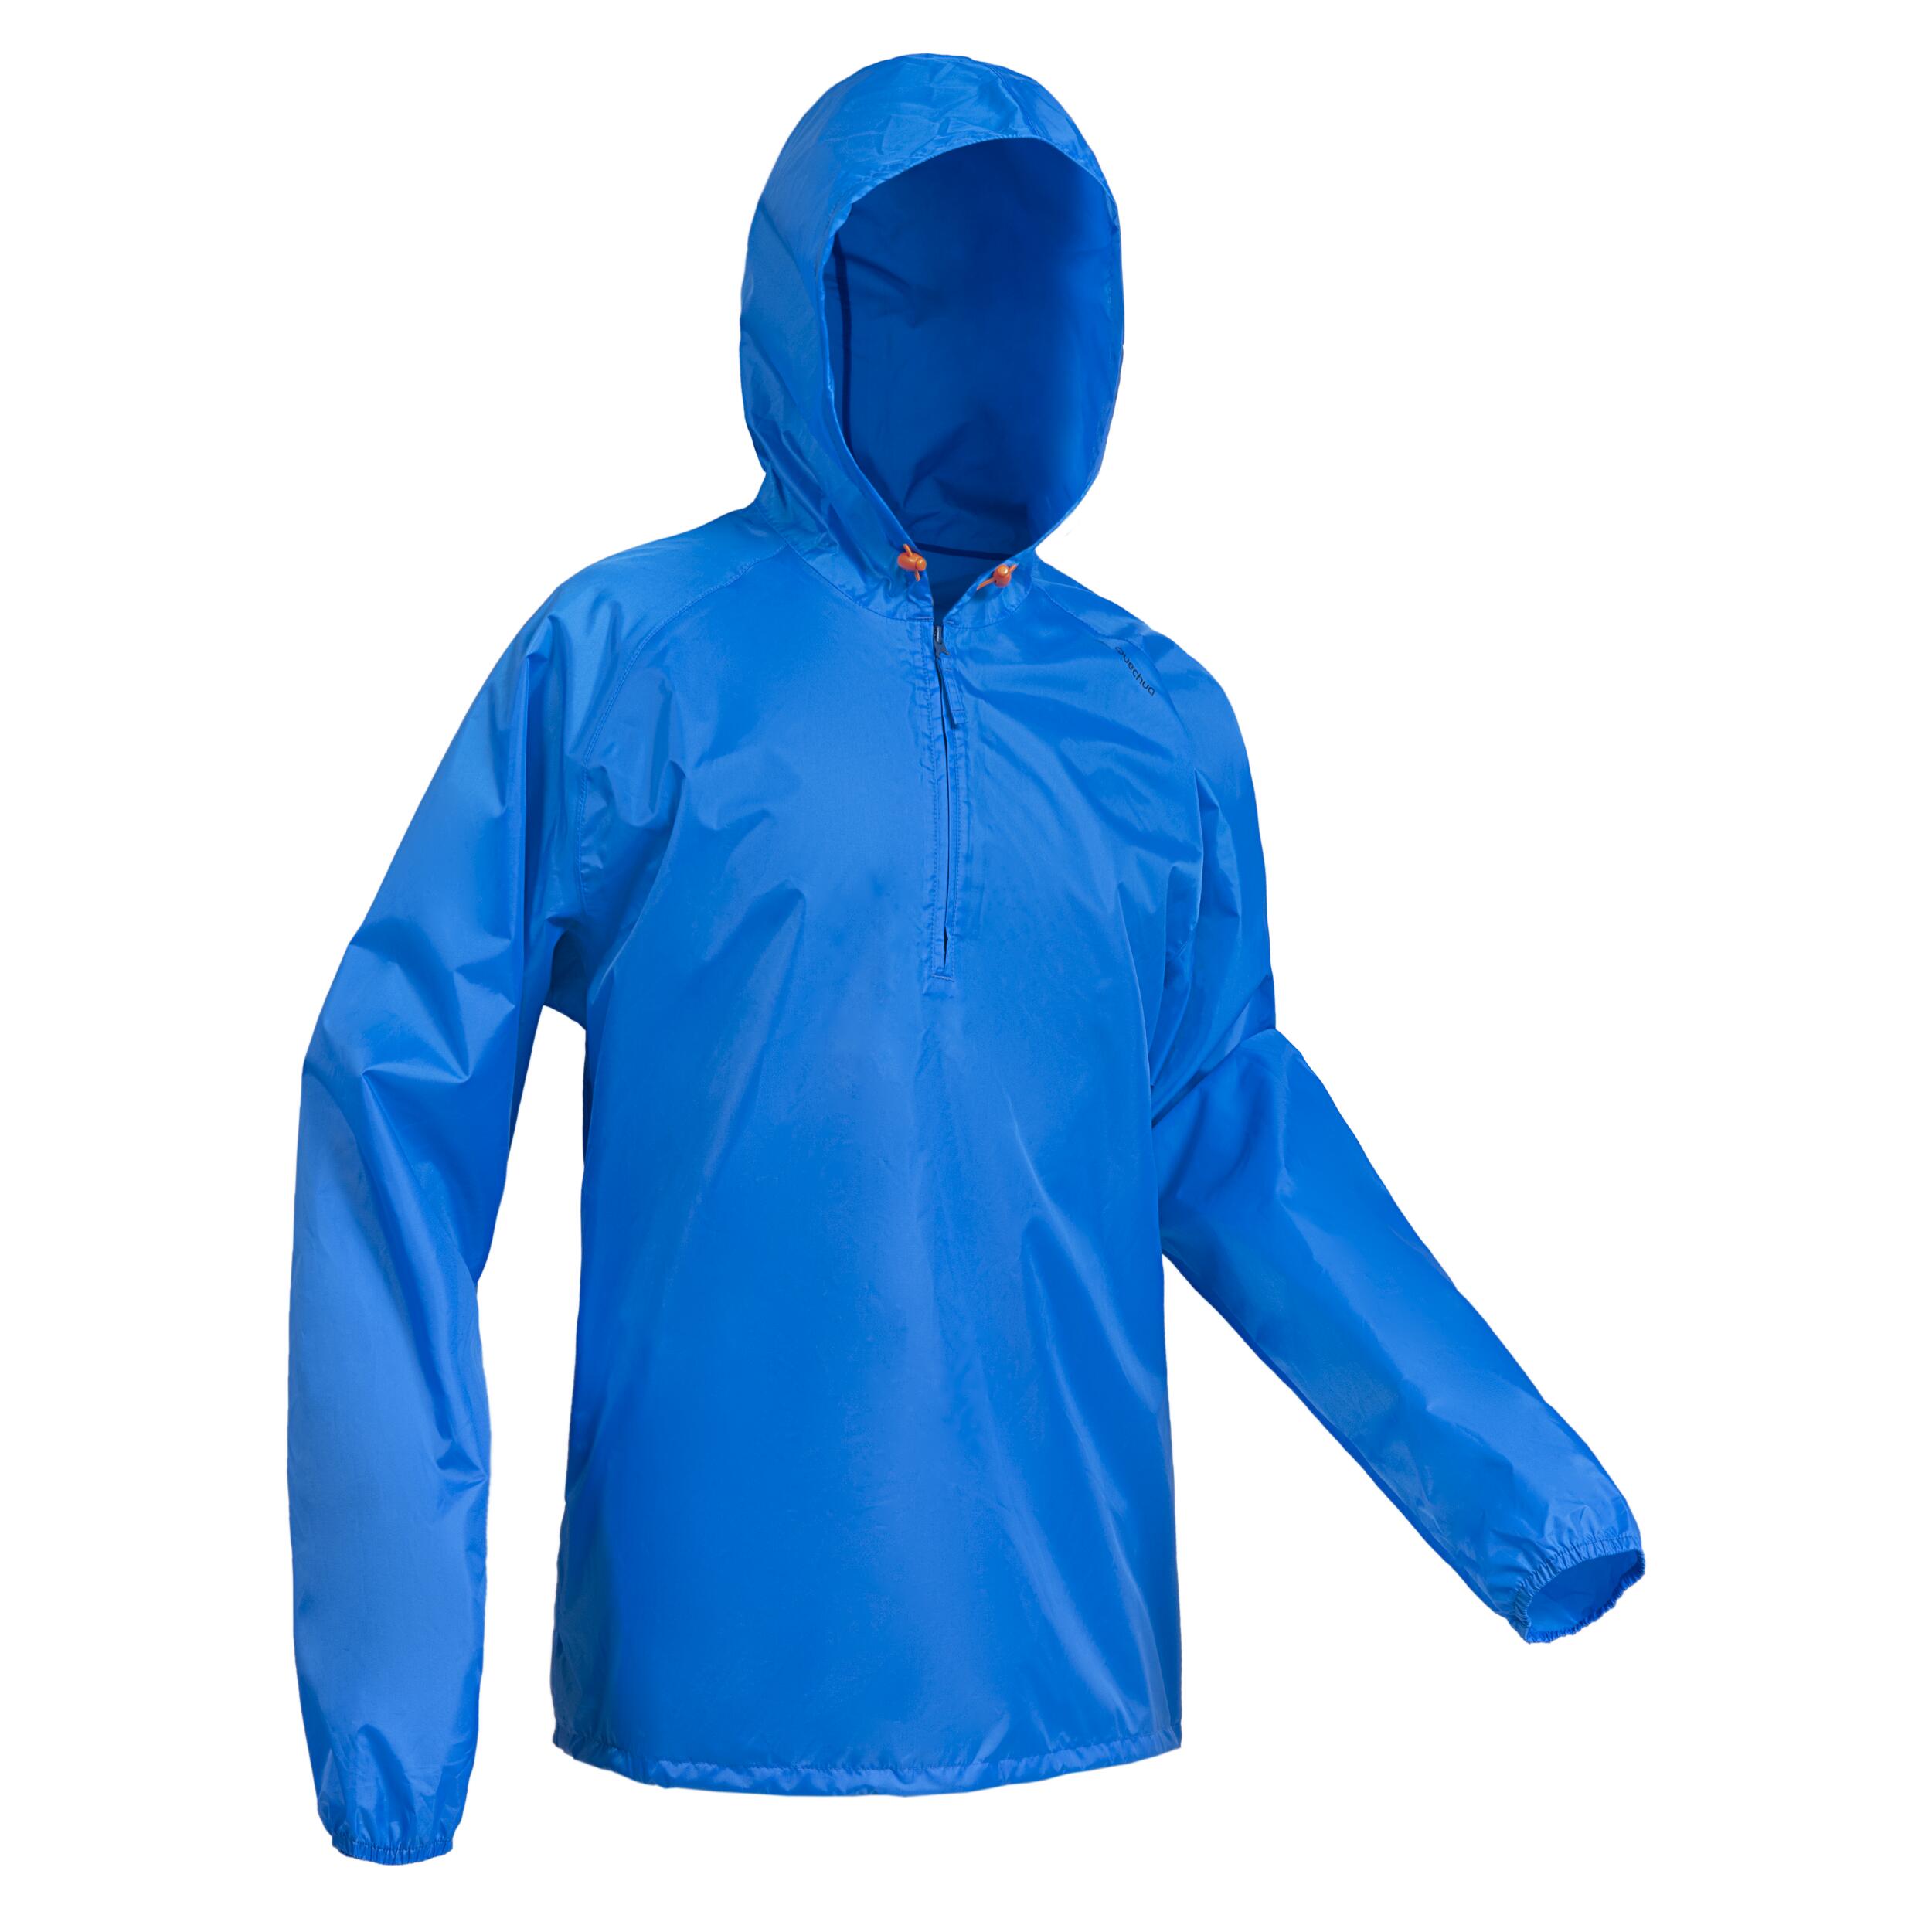 How to choose a waterproof jacket?